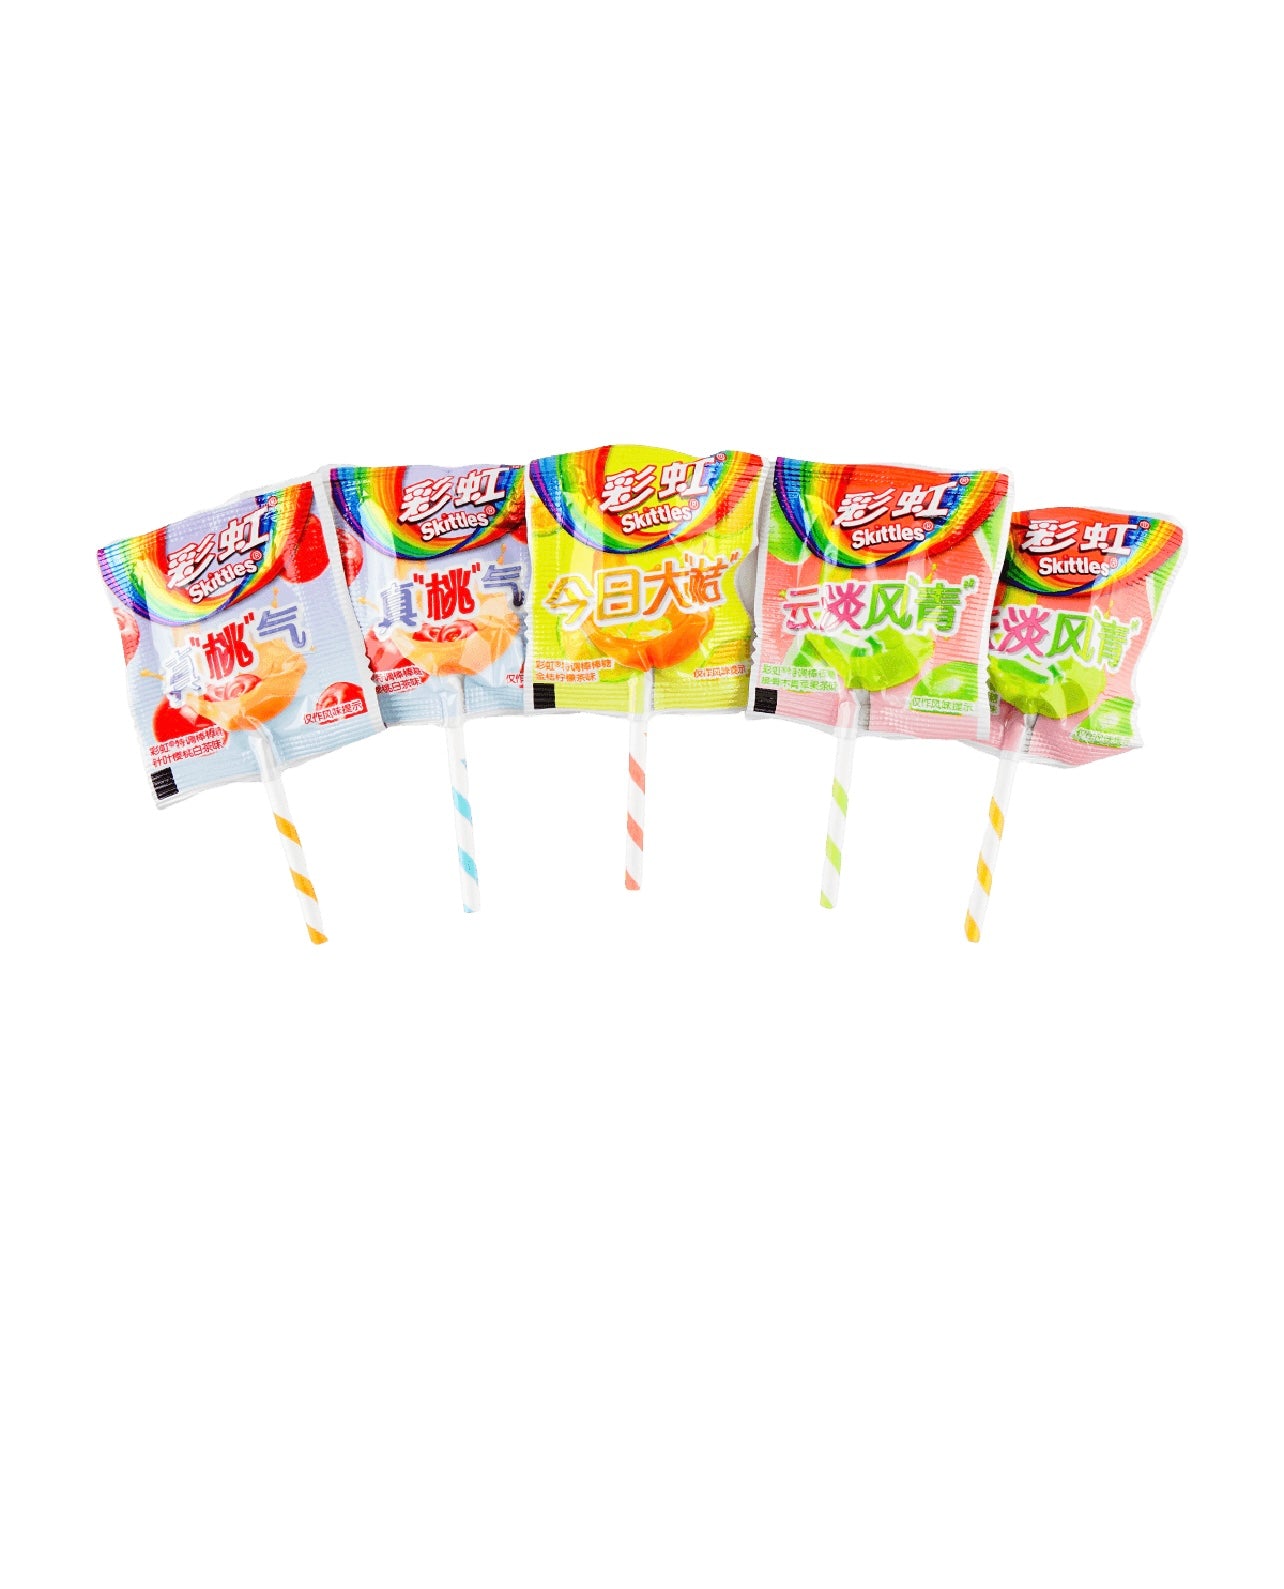 Skittles-Lolipop Fruit Tea Flavor 54g - China